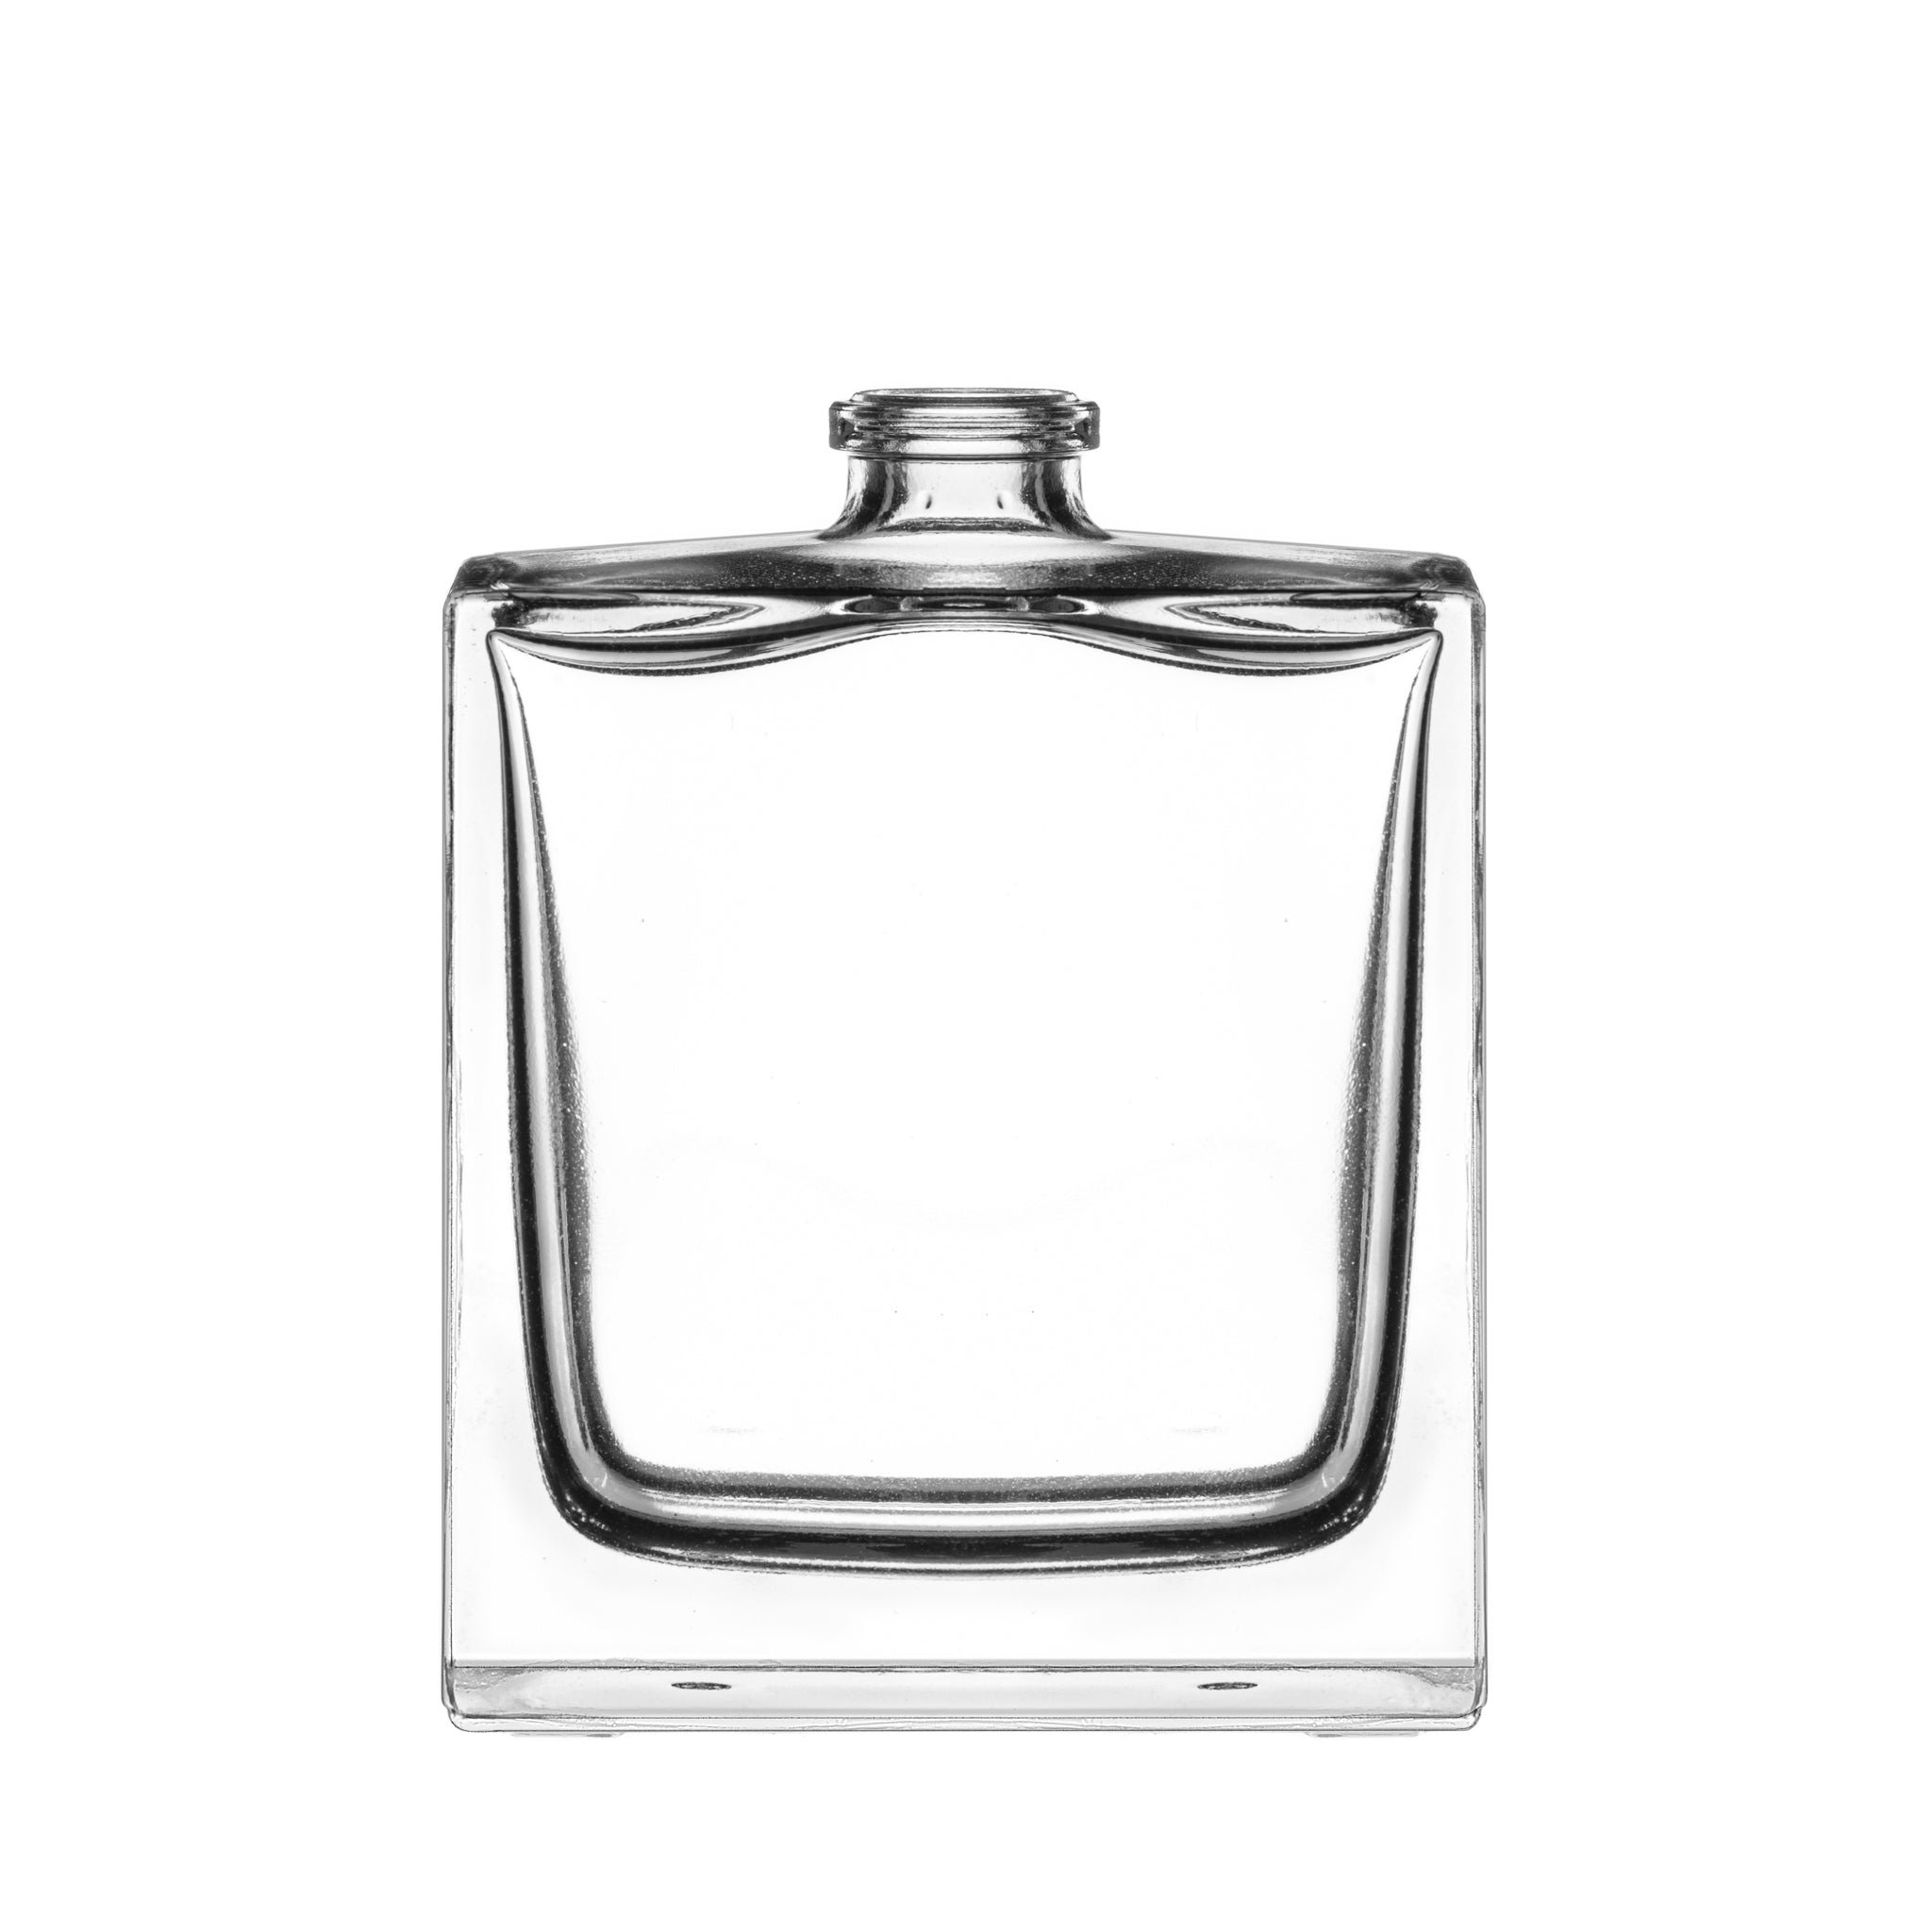 David Glass Perfume Bottle - Glass New High